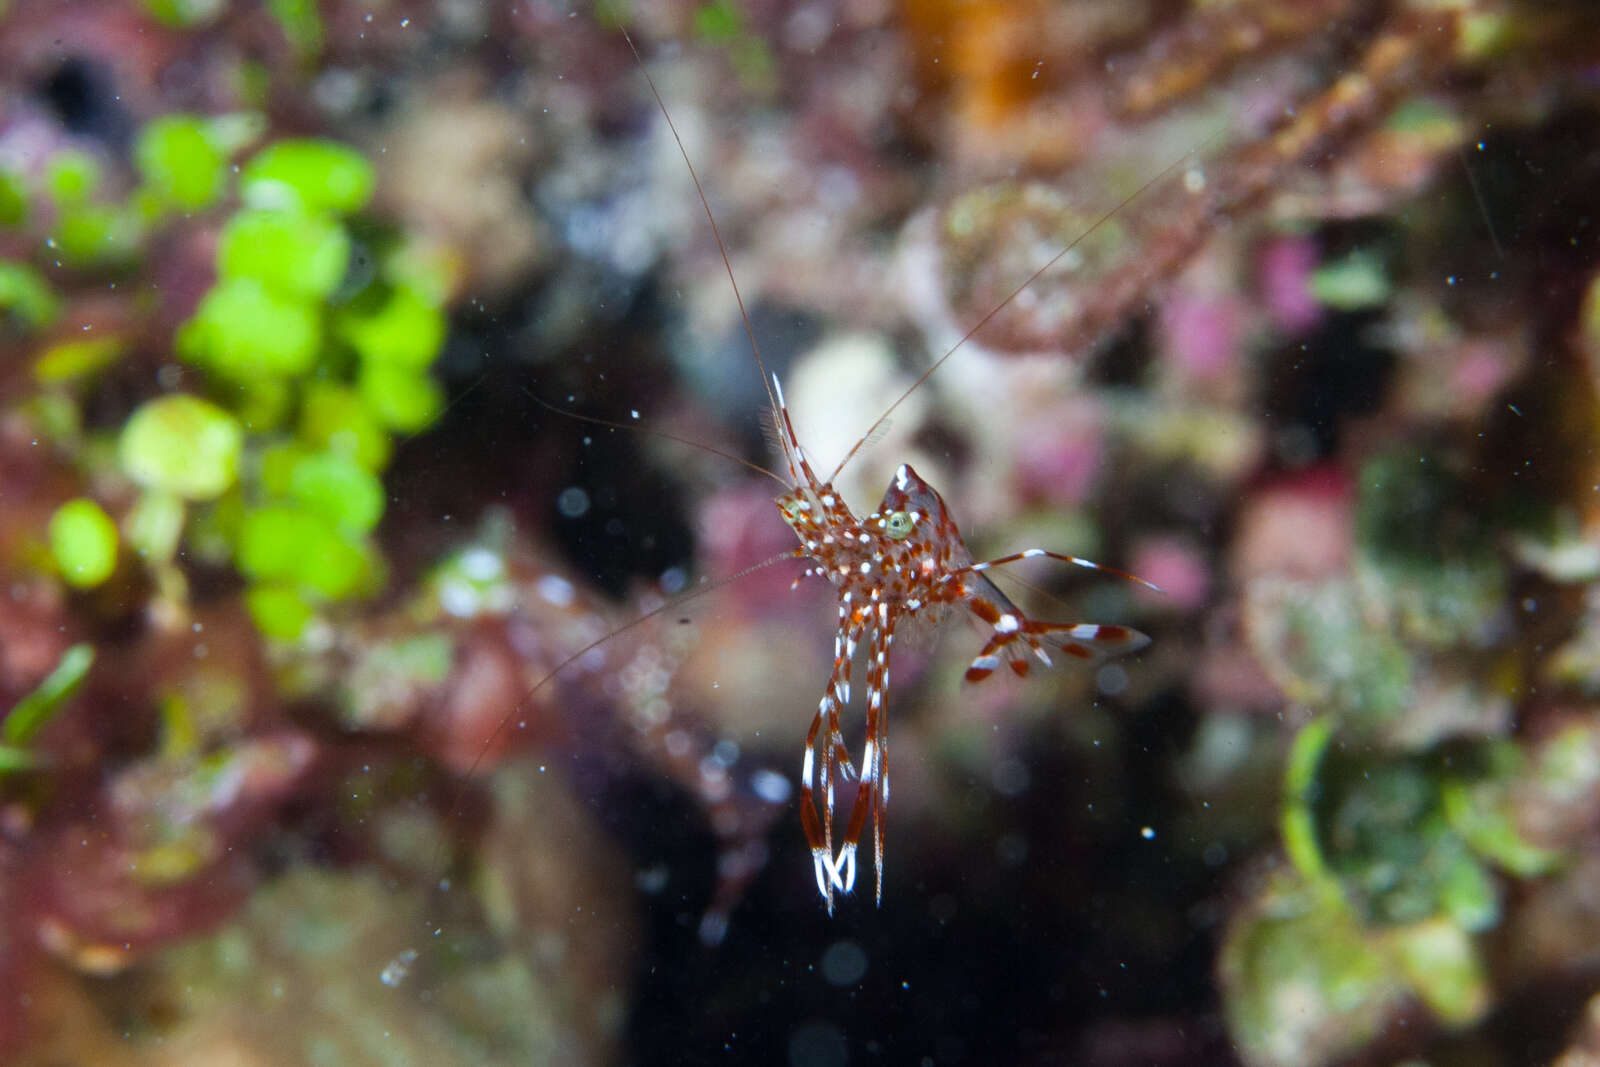 Image of clear cleaner shrimp